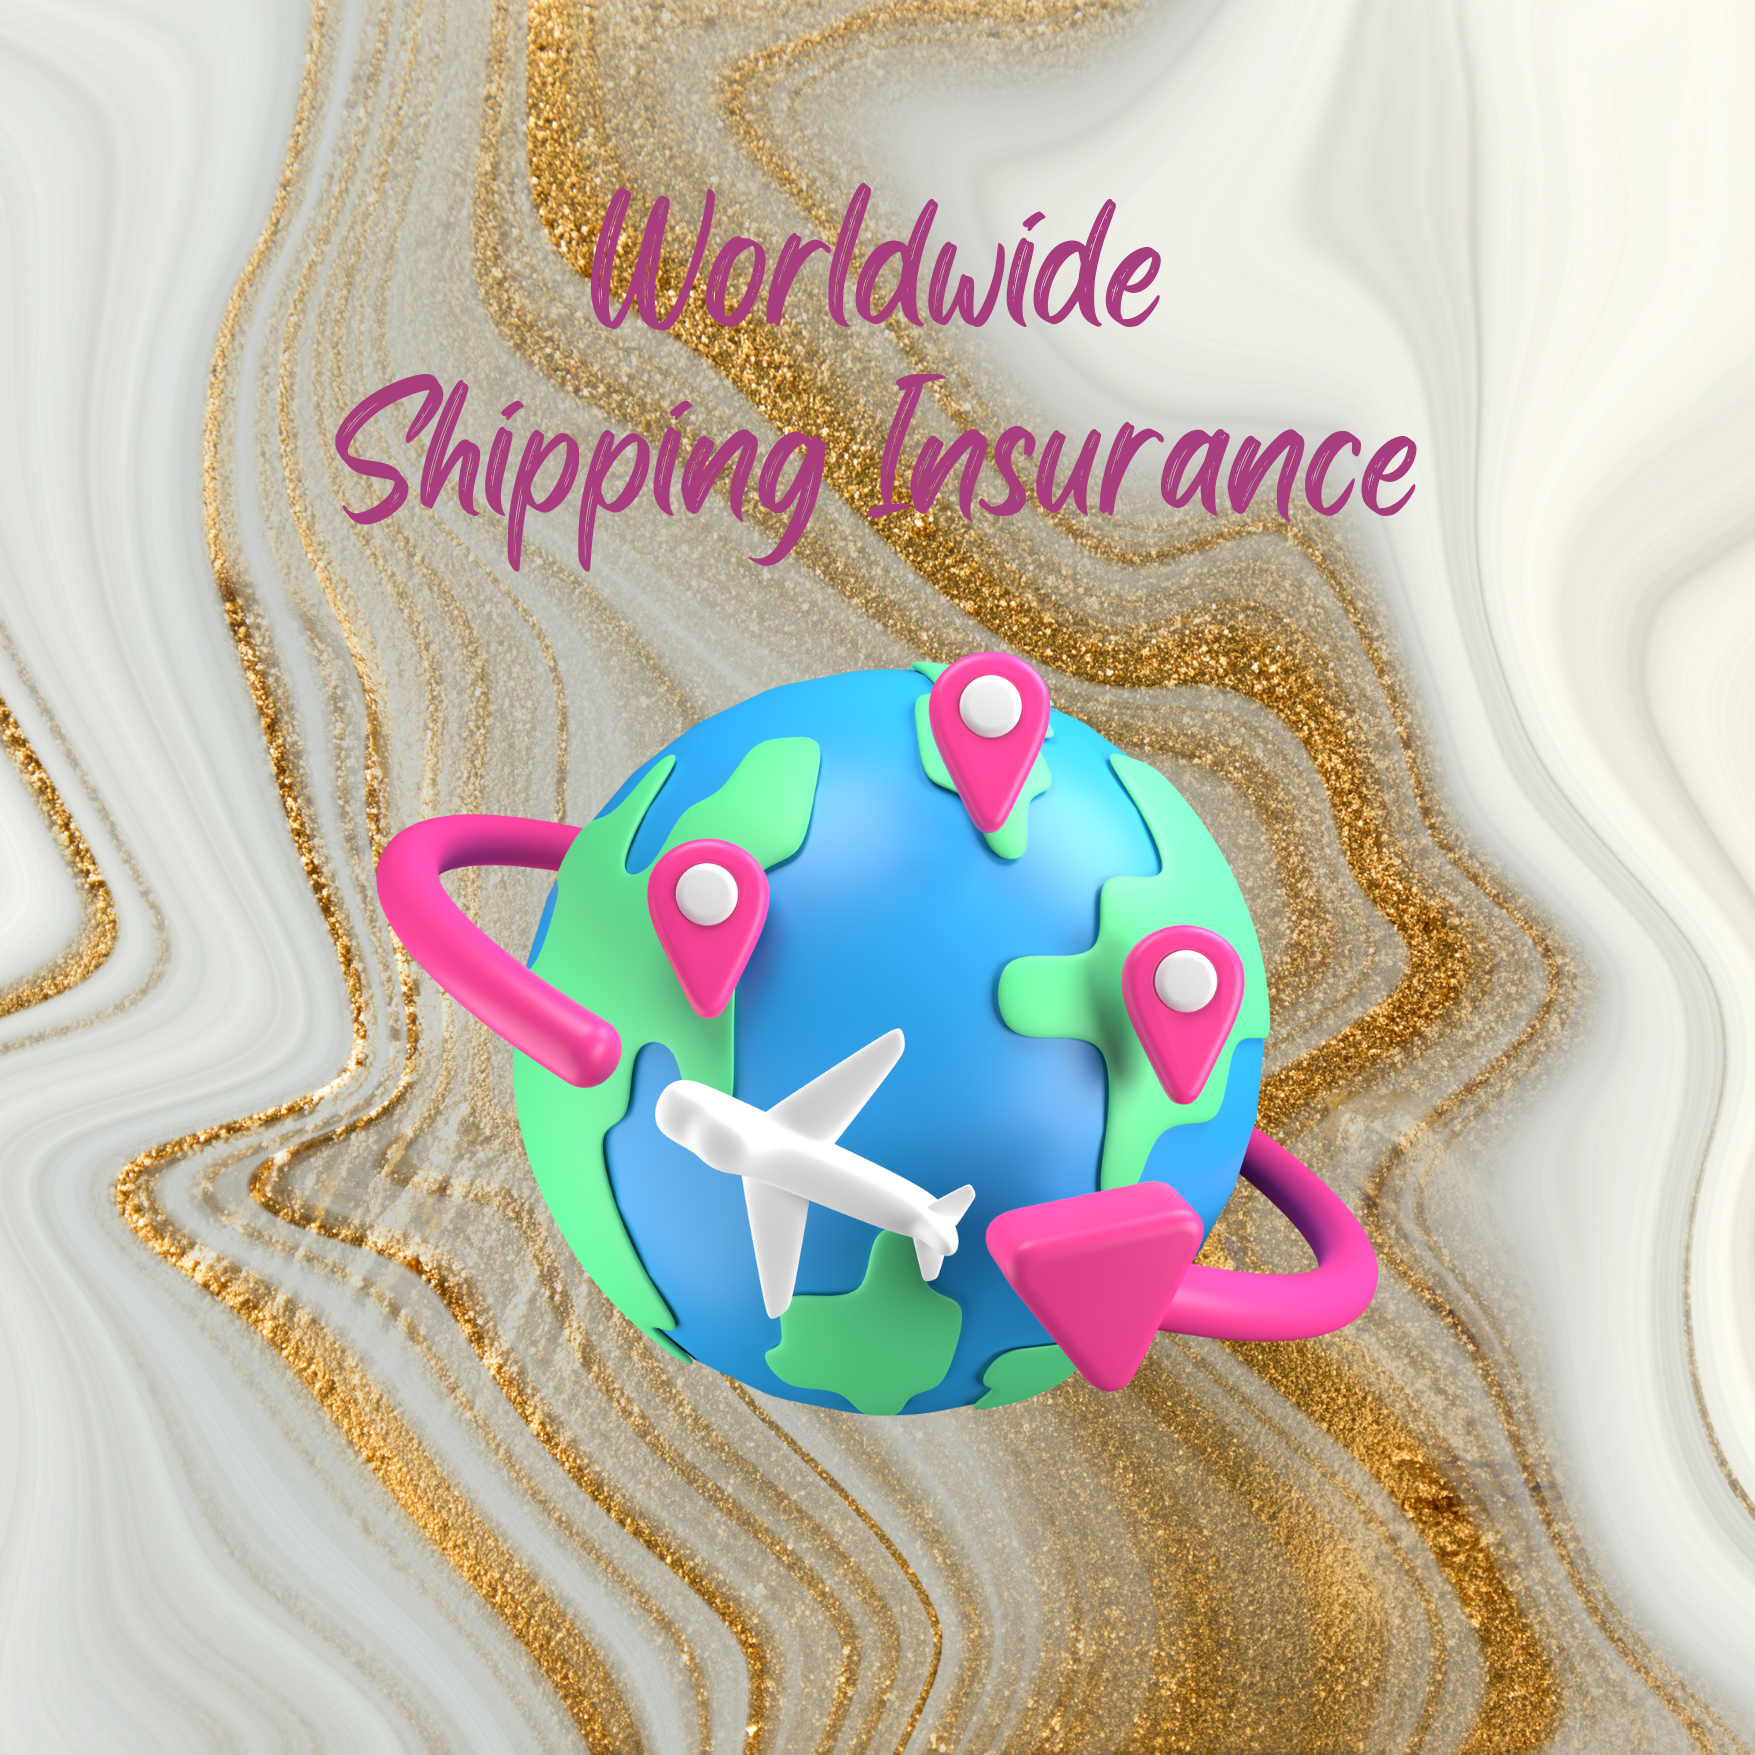 Worldwide Shipping Insurance